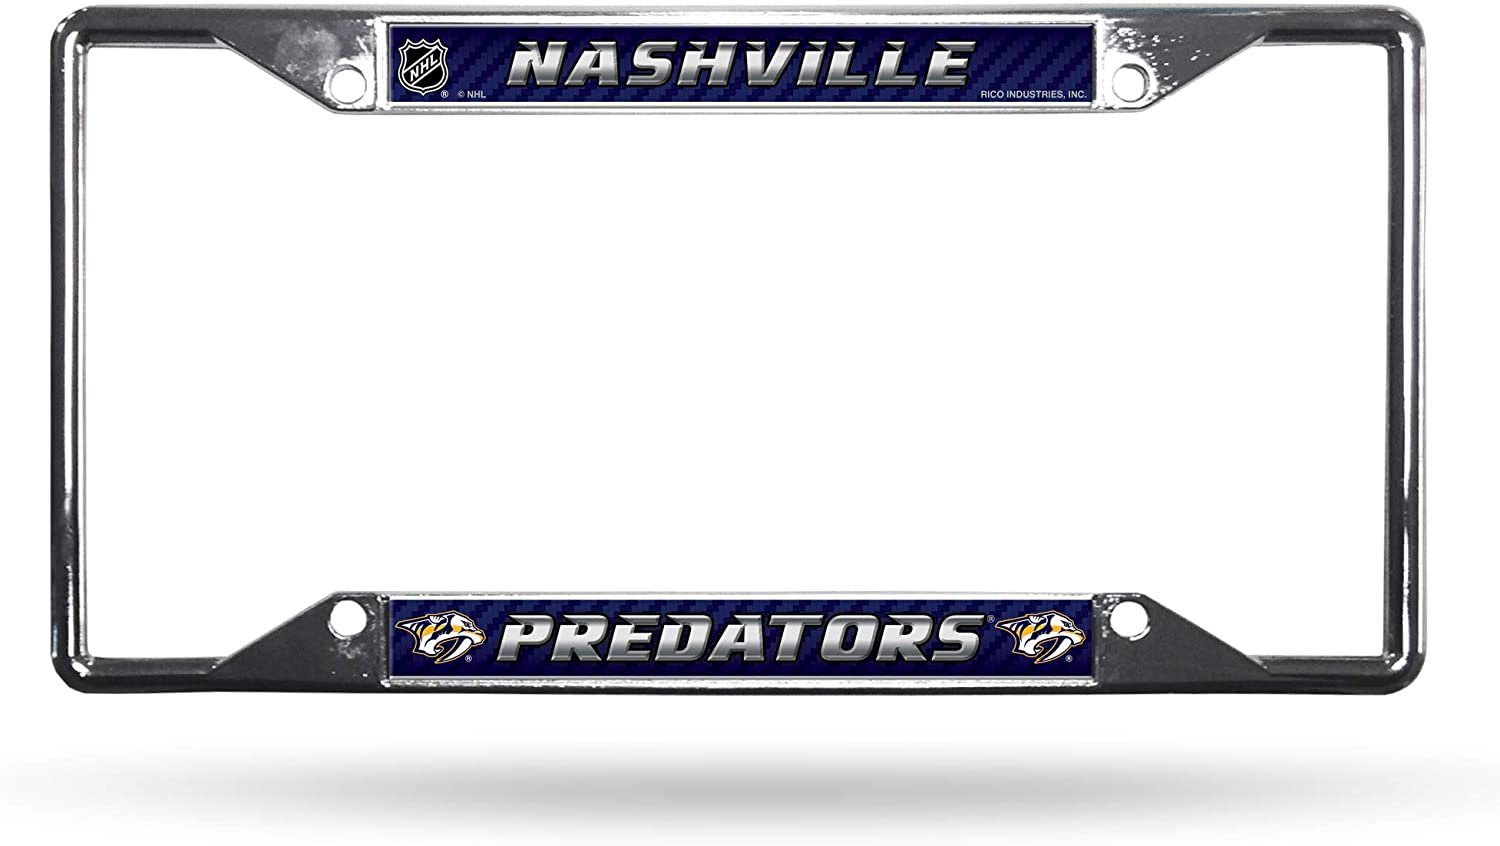 Nashville Predators Metal License License Plate Frame Chrome Tag Cover, EZ View Design, 12x6 Inch